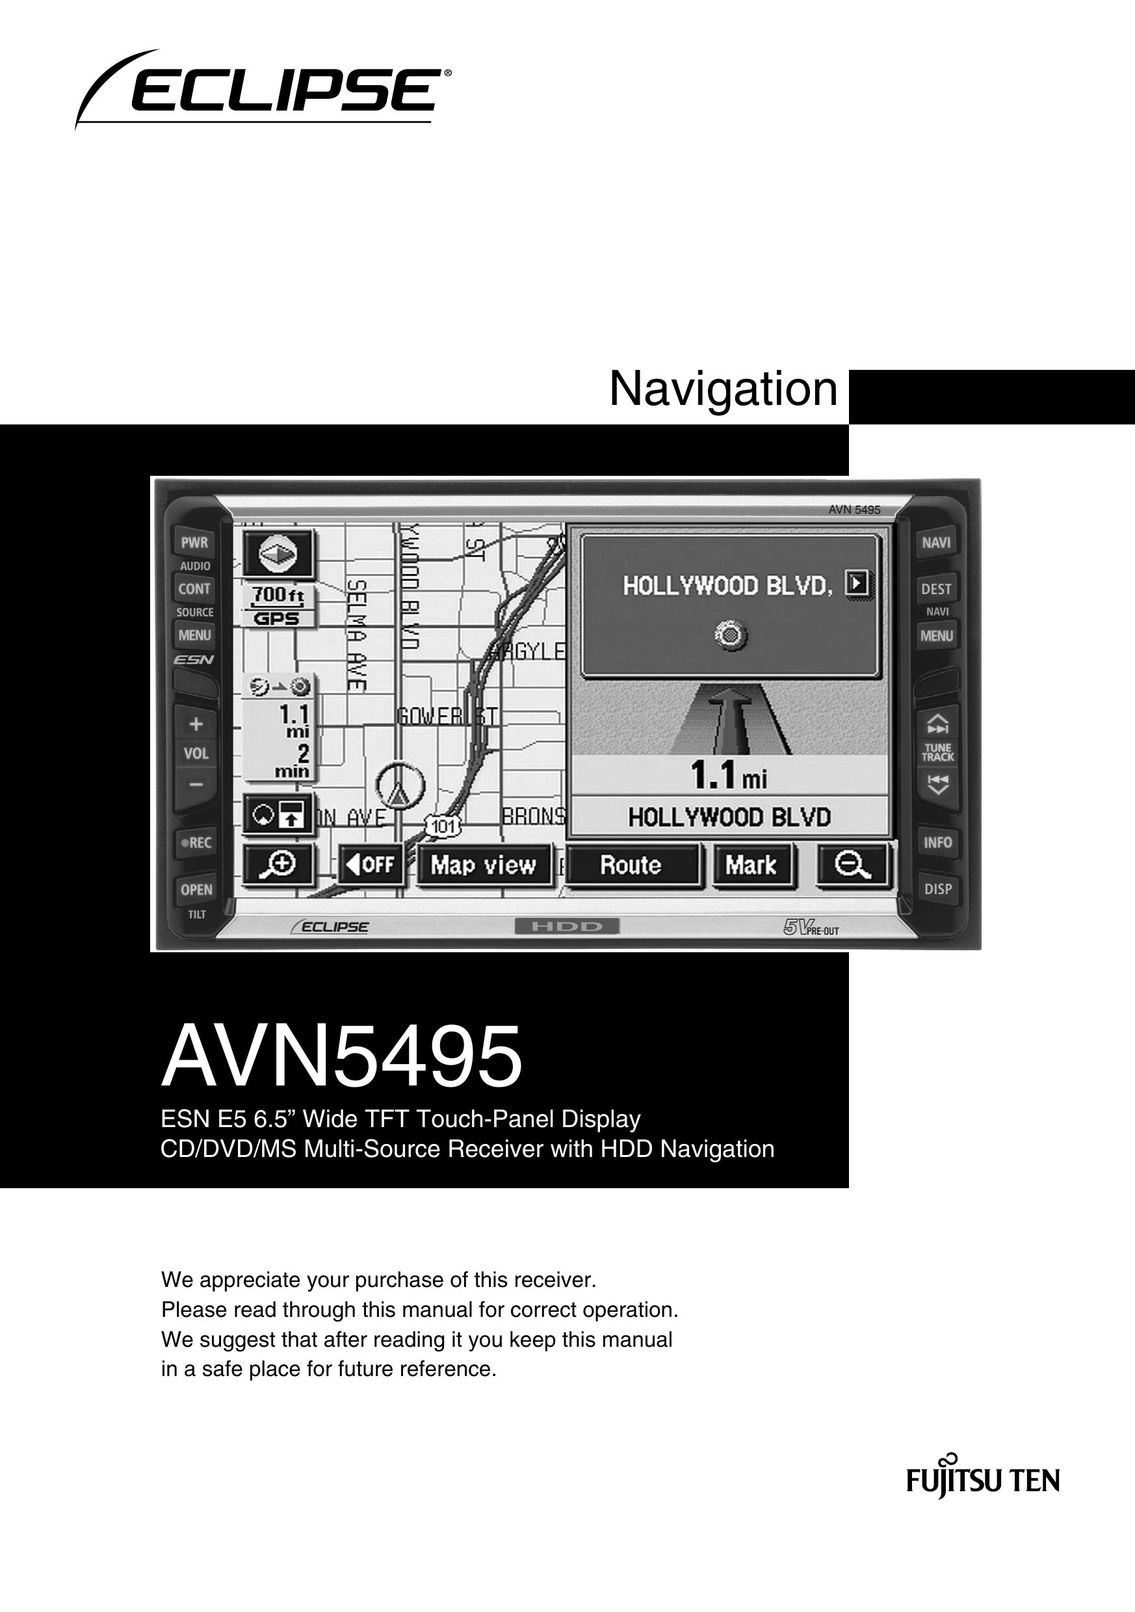 Eclipse - Fujitsu Ten AVN5495 Car Video System User Manual